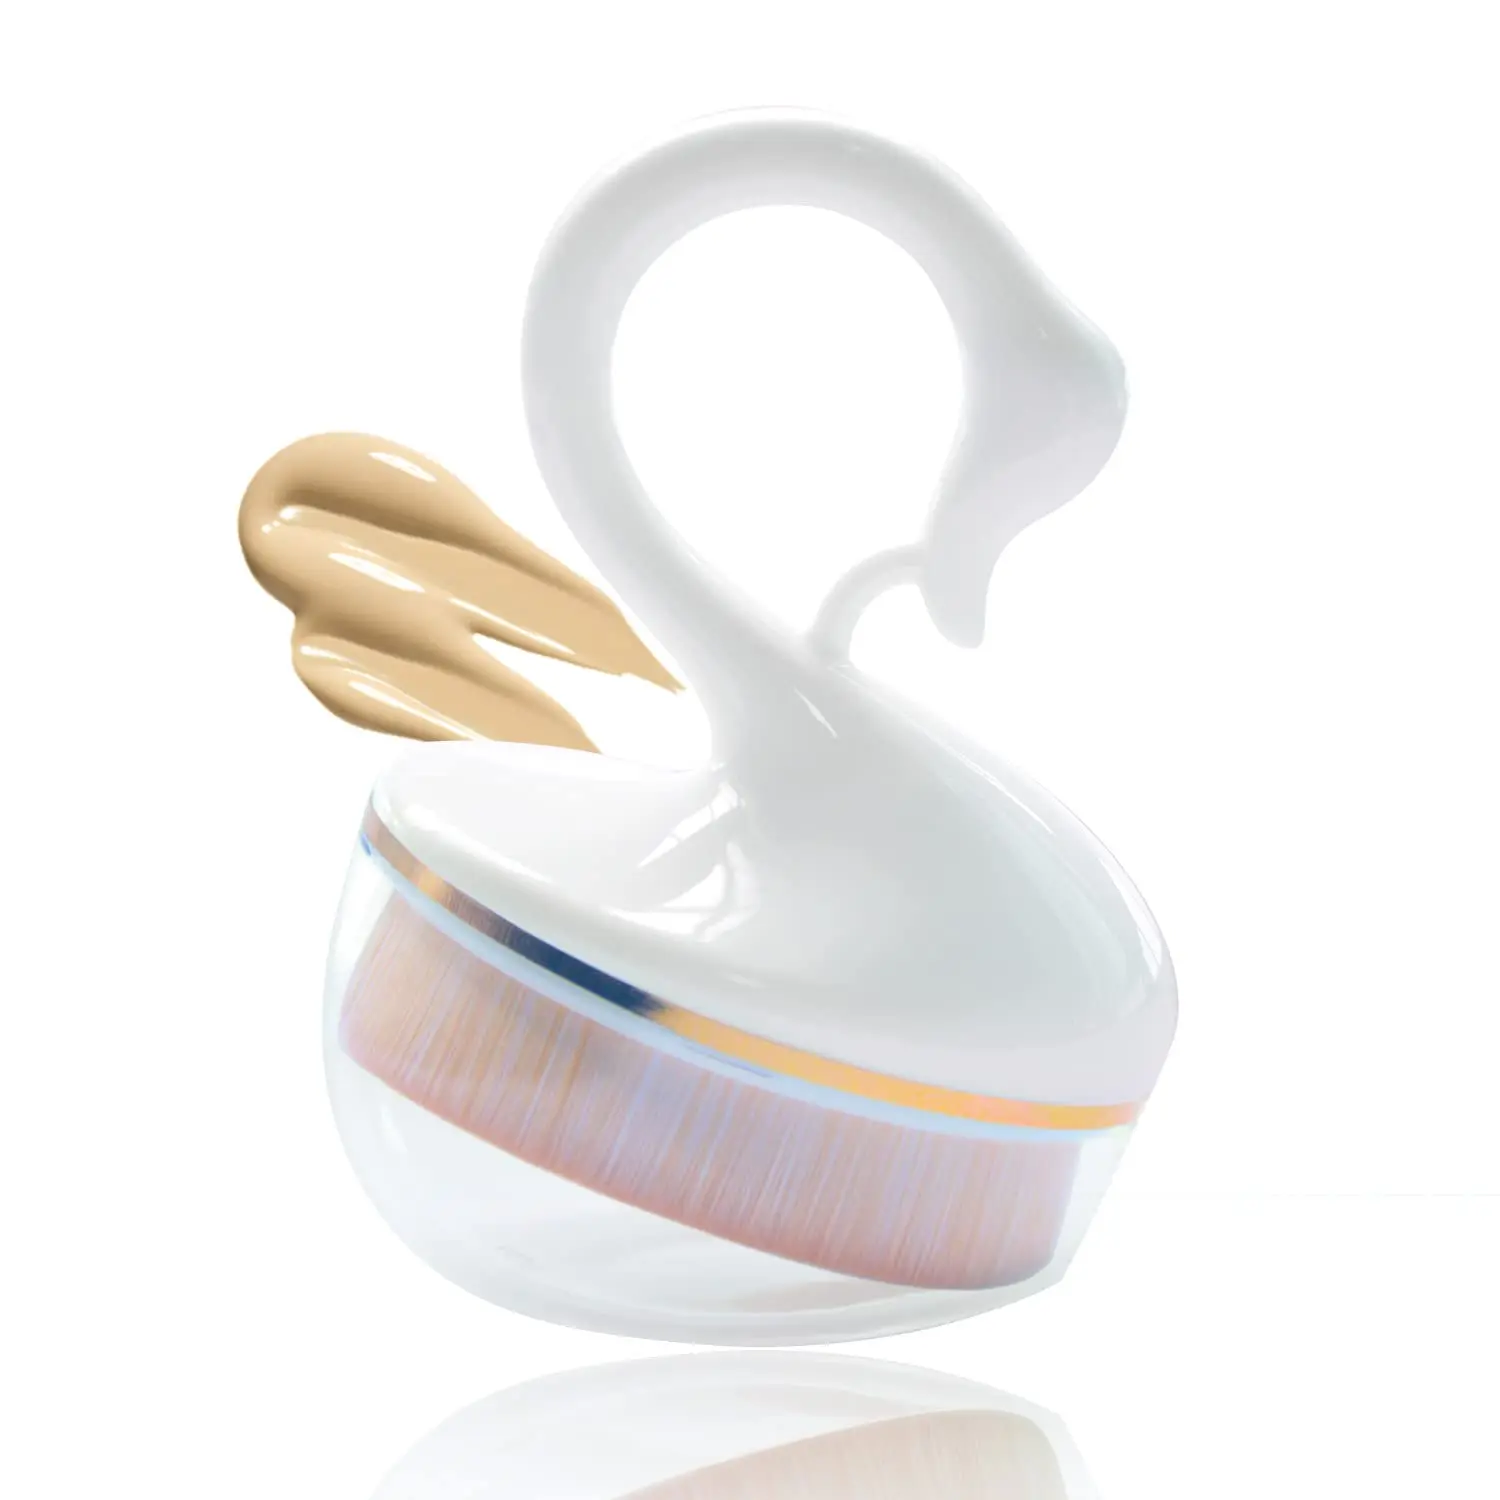 

Flat Top Swan Brush Foundation Makeup Brushes for Cream, Blending Liquid or Flawless Powder Cosmetics, Brochas Maquillaje